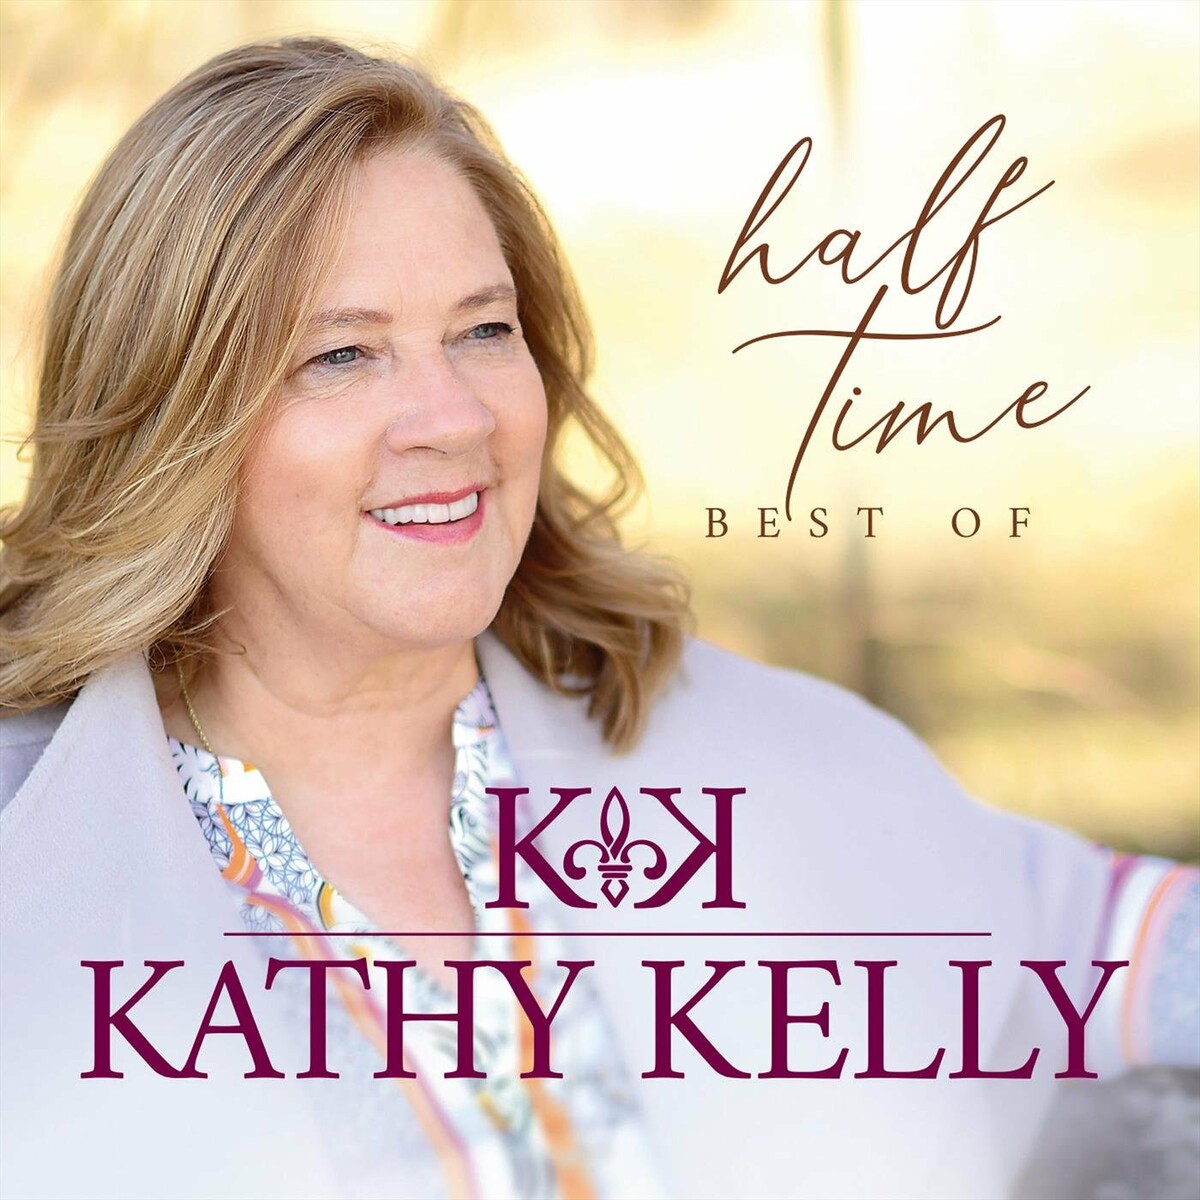 Kathy Kelly - Half Time - Best Of